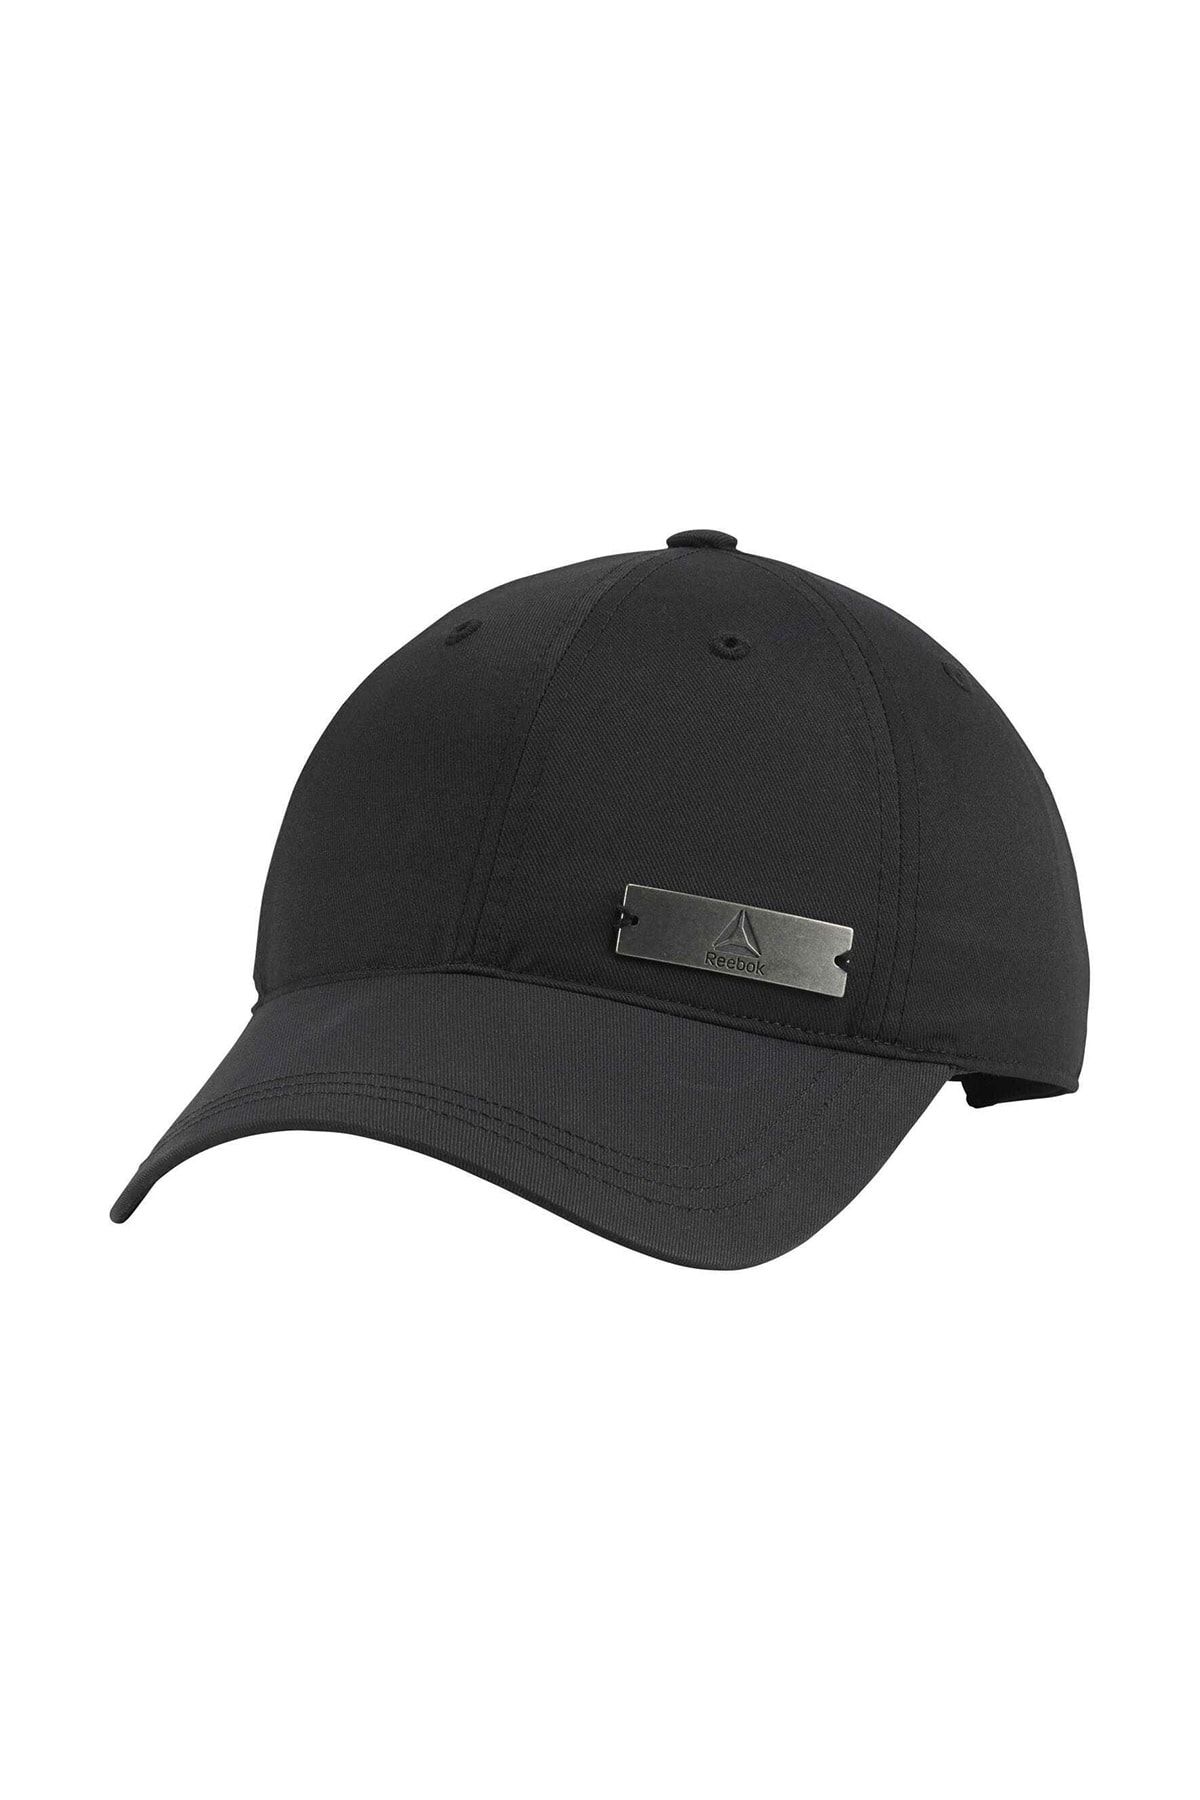 Reebok W FOUND CAP Siyah Kadın Şapka 100584373